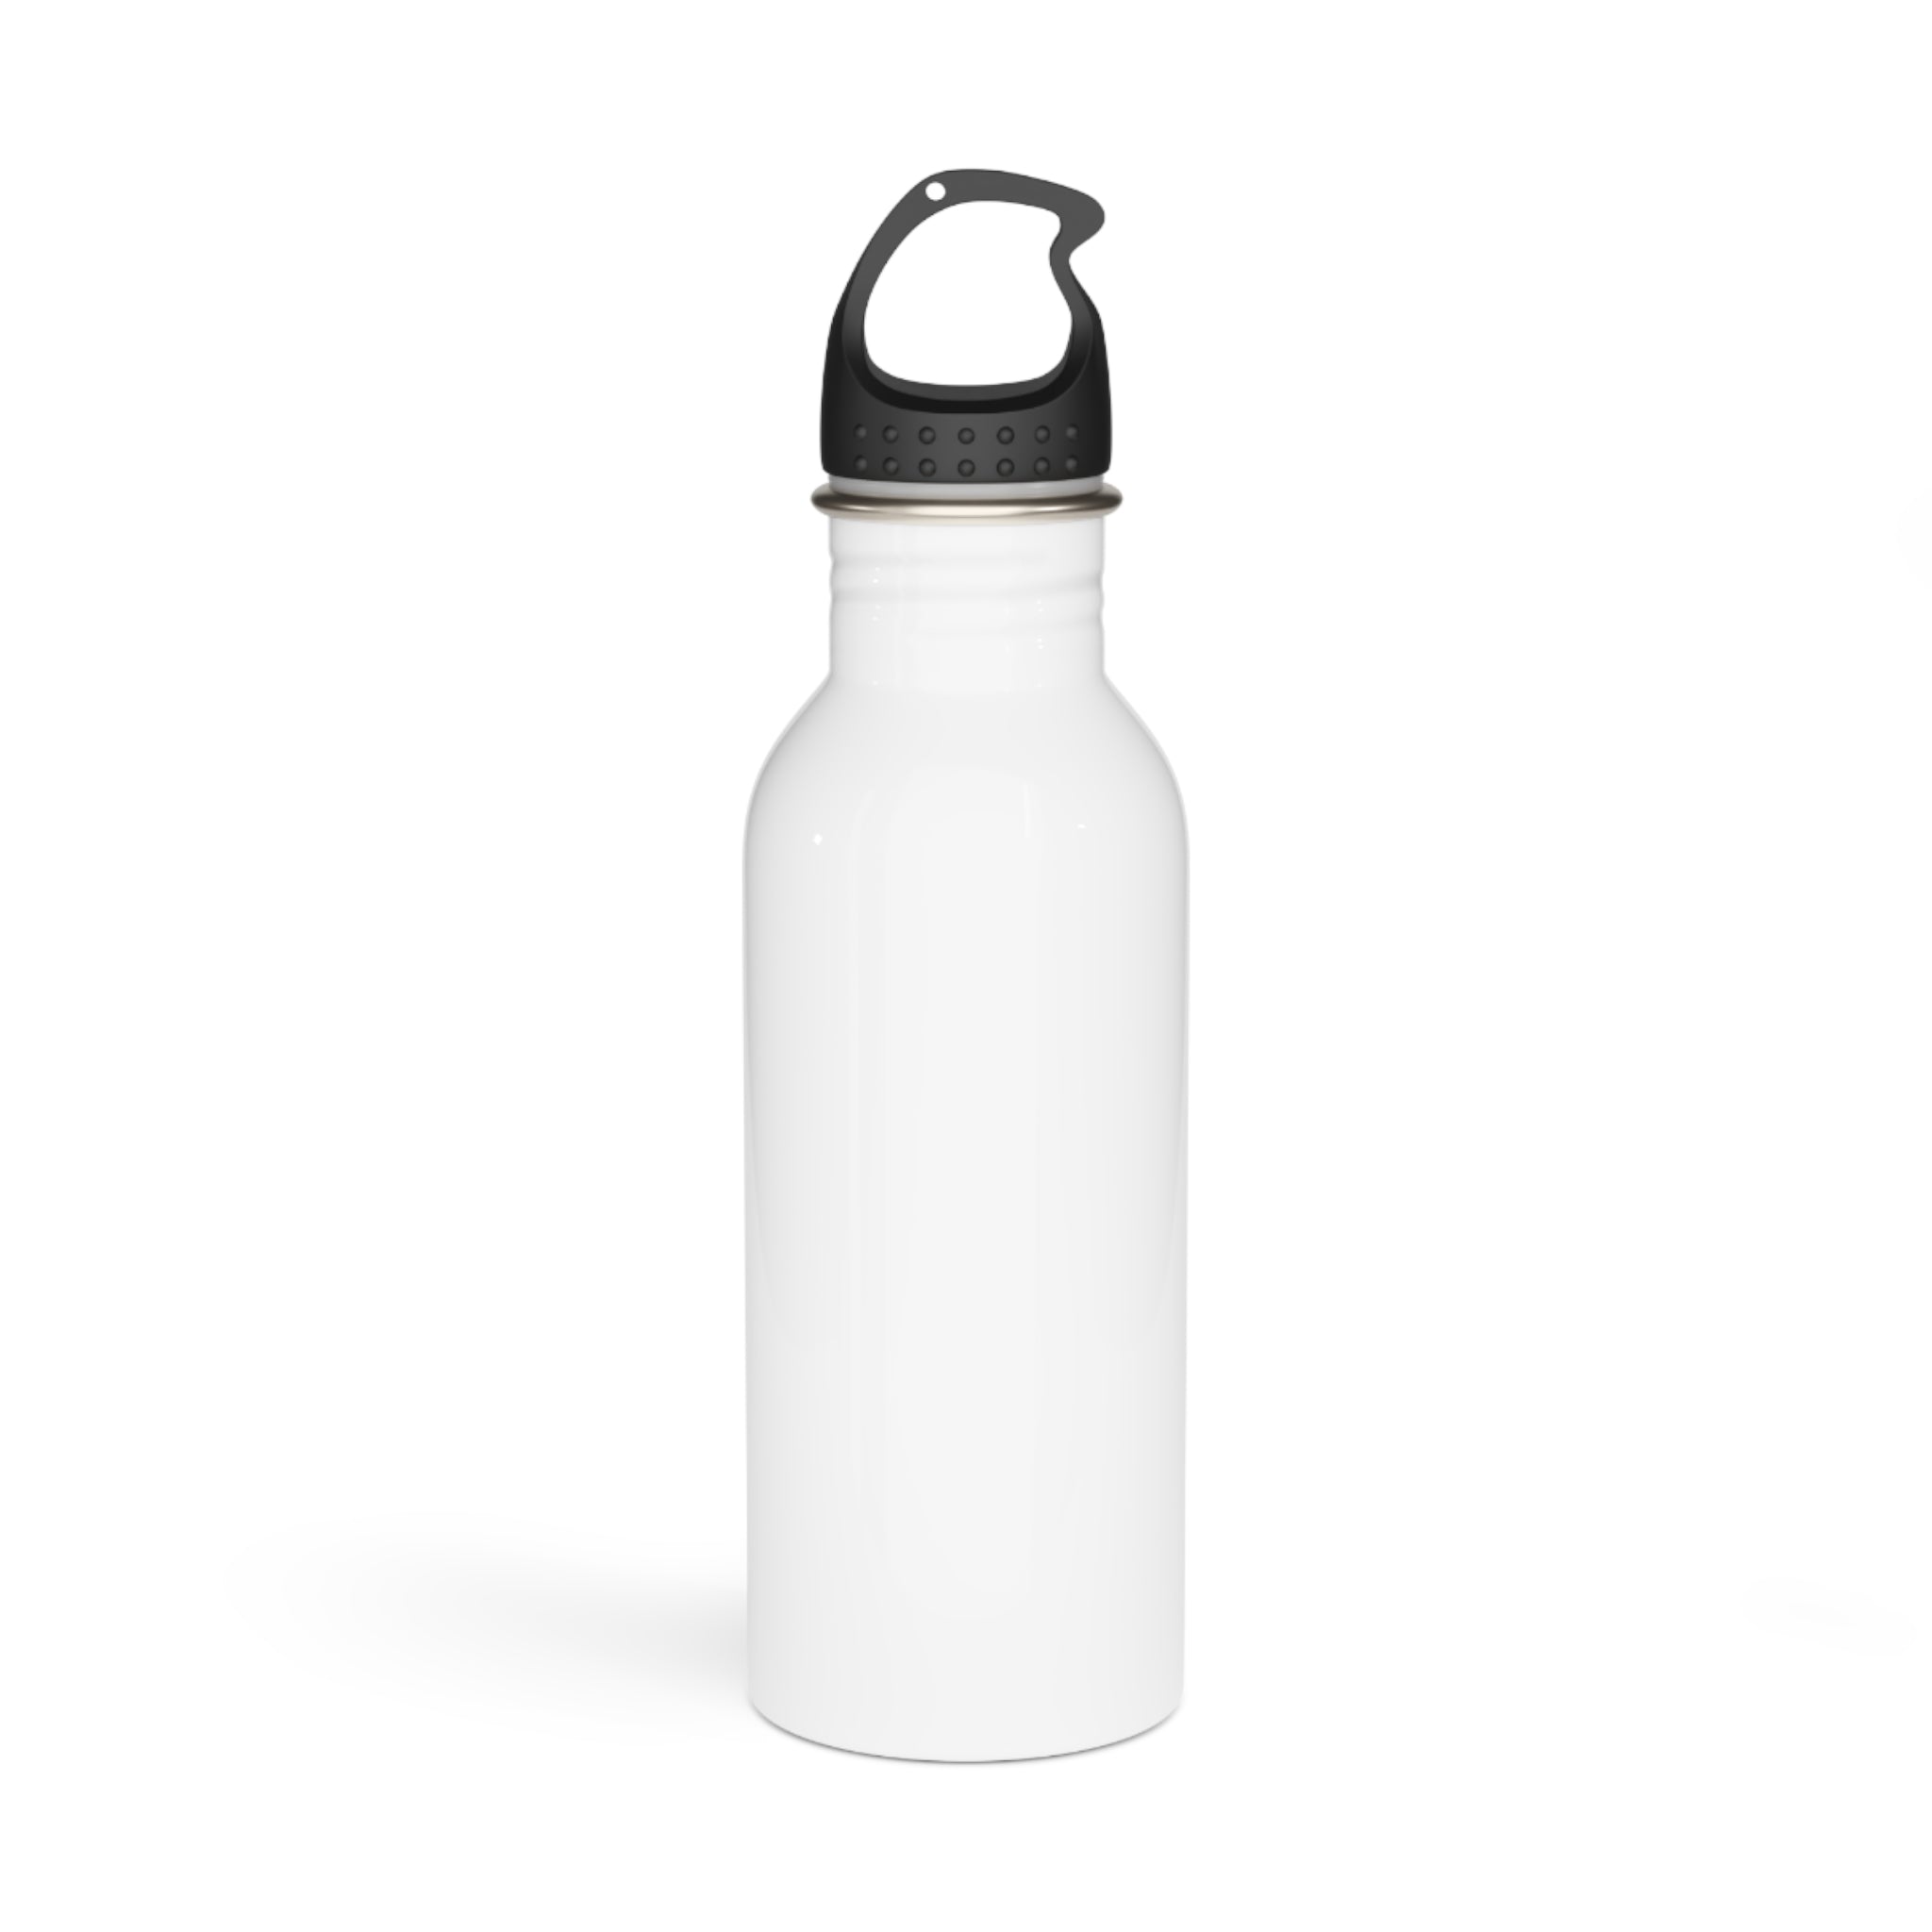 OTL Water Bottle (Stainless Steel)